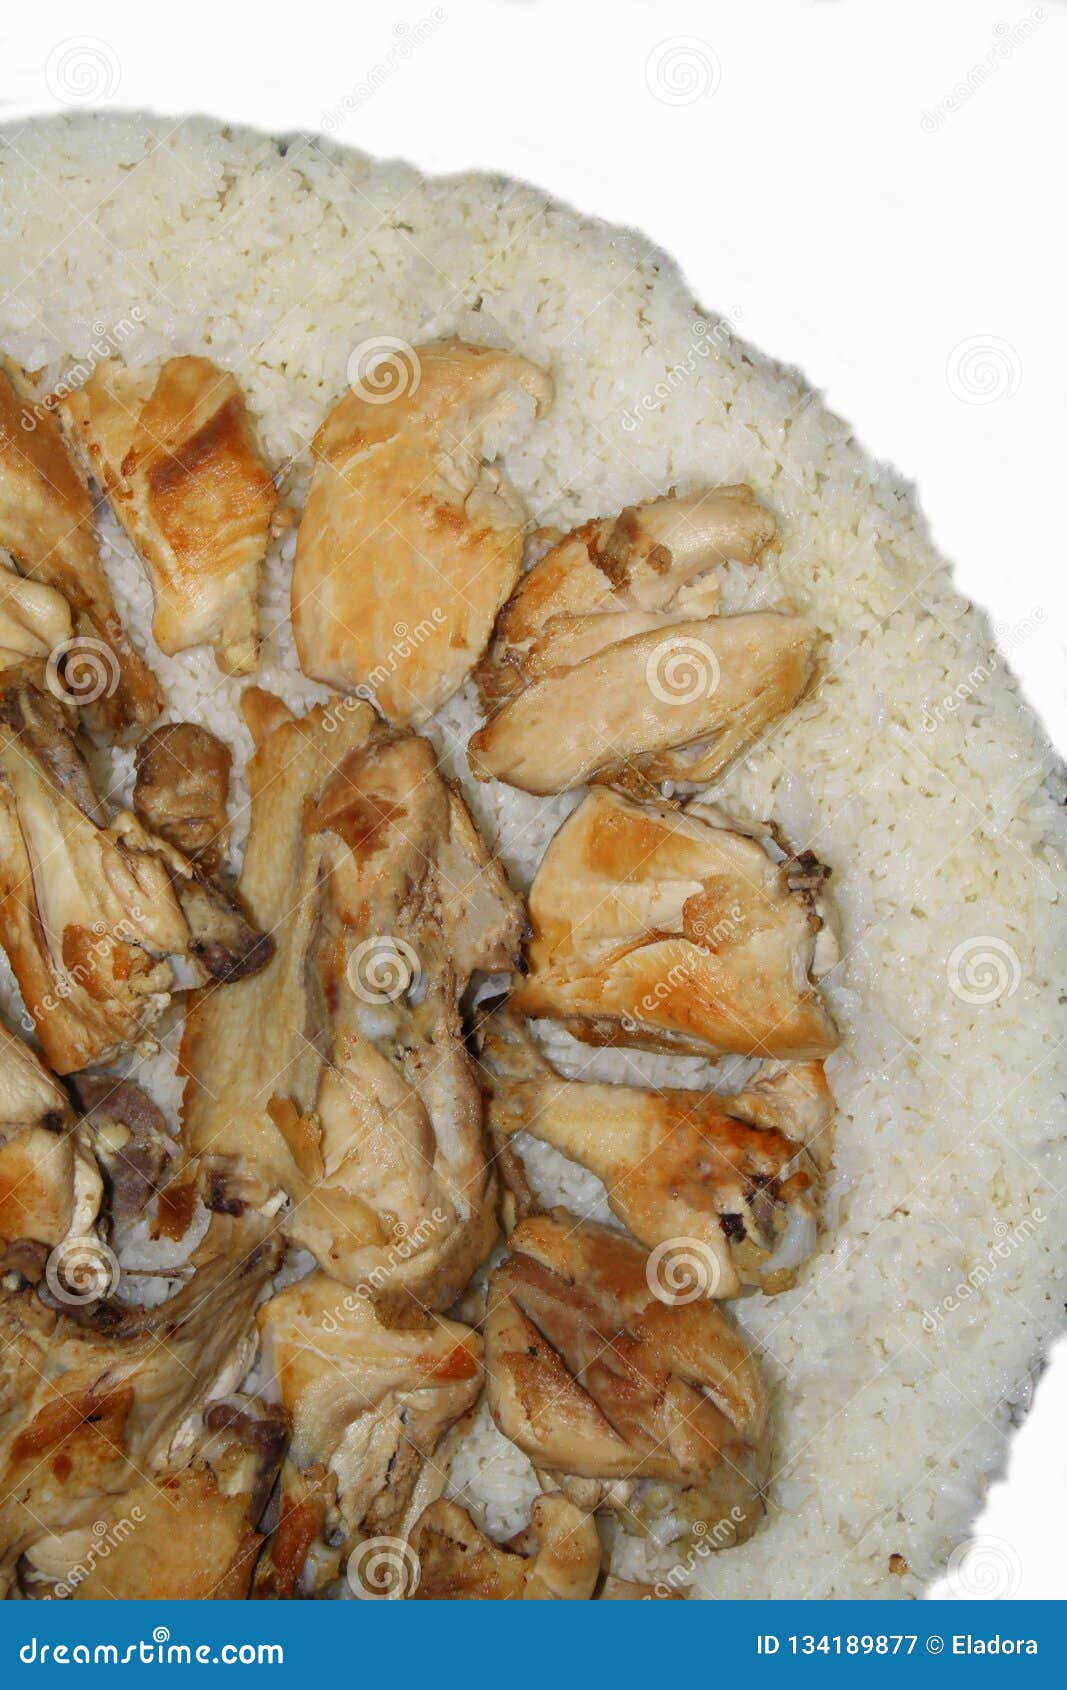 chicken pieces on pilav, turkish cuisine - image